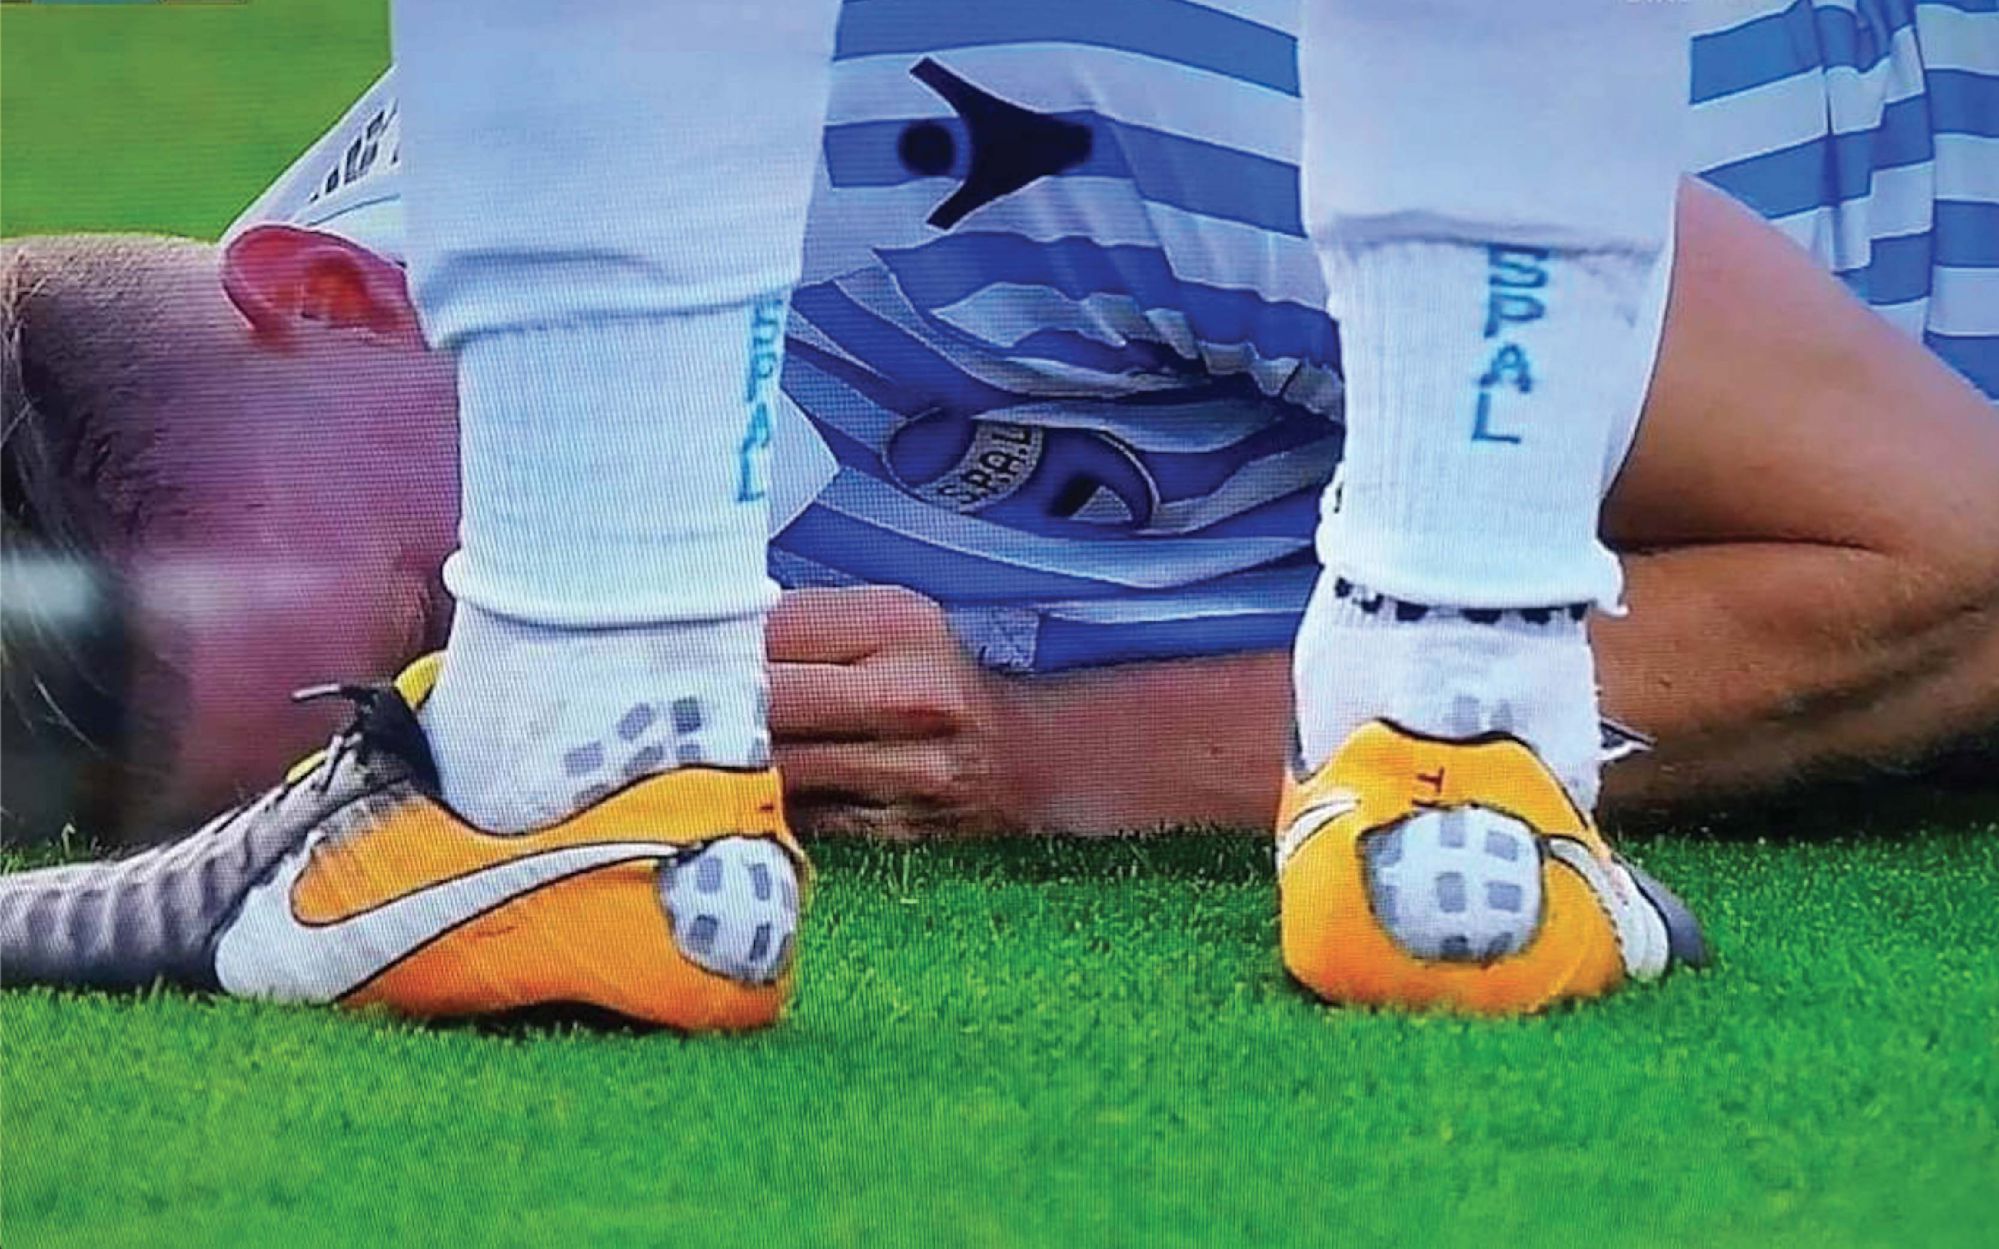 Why do footballers cut holes in their socks?